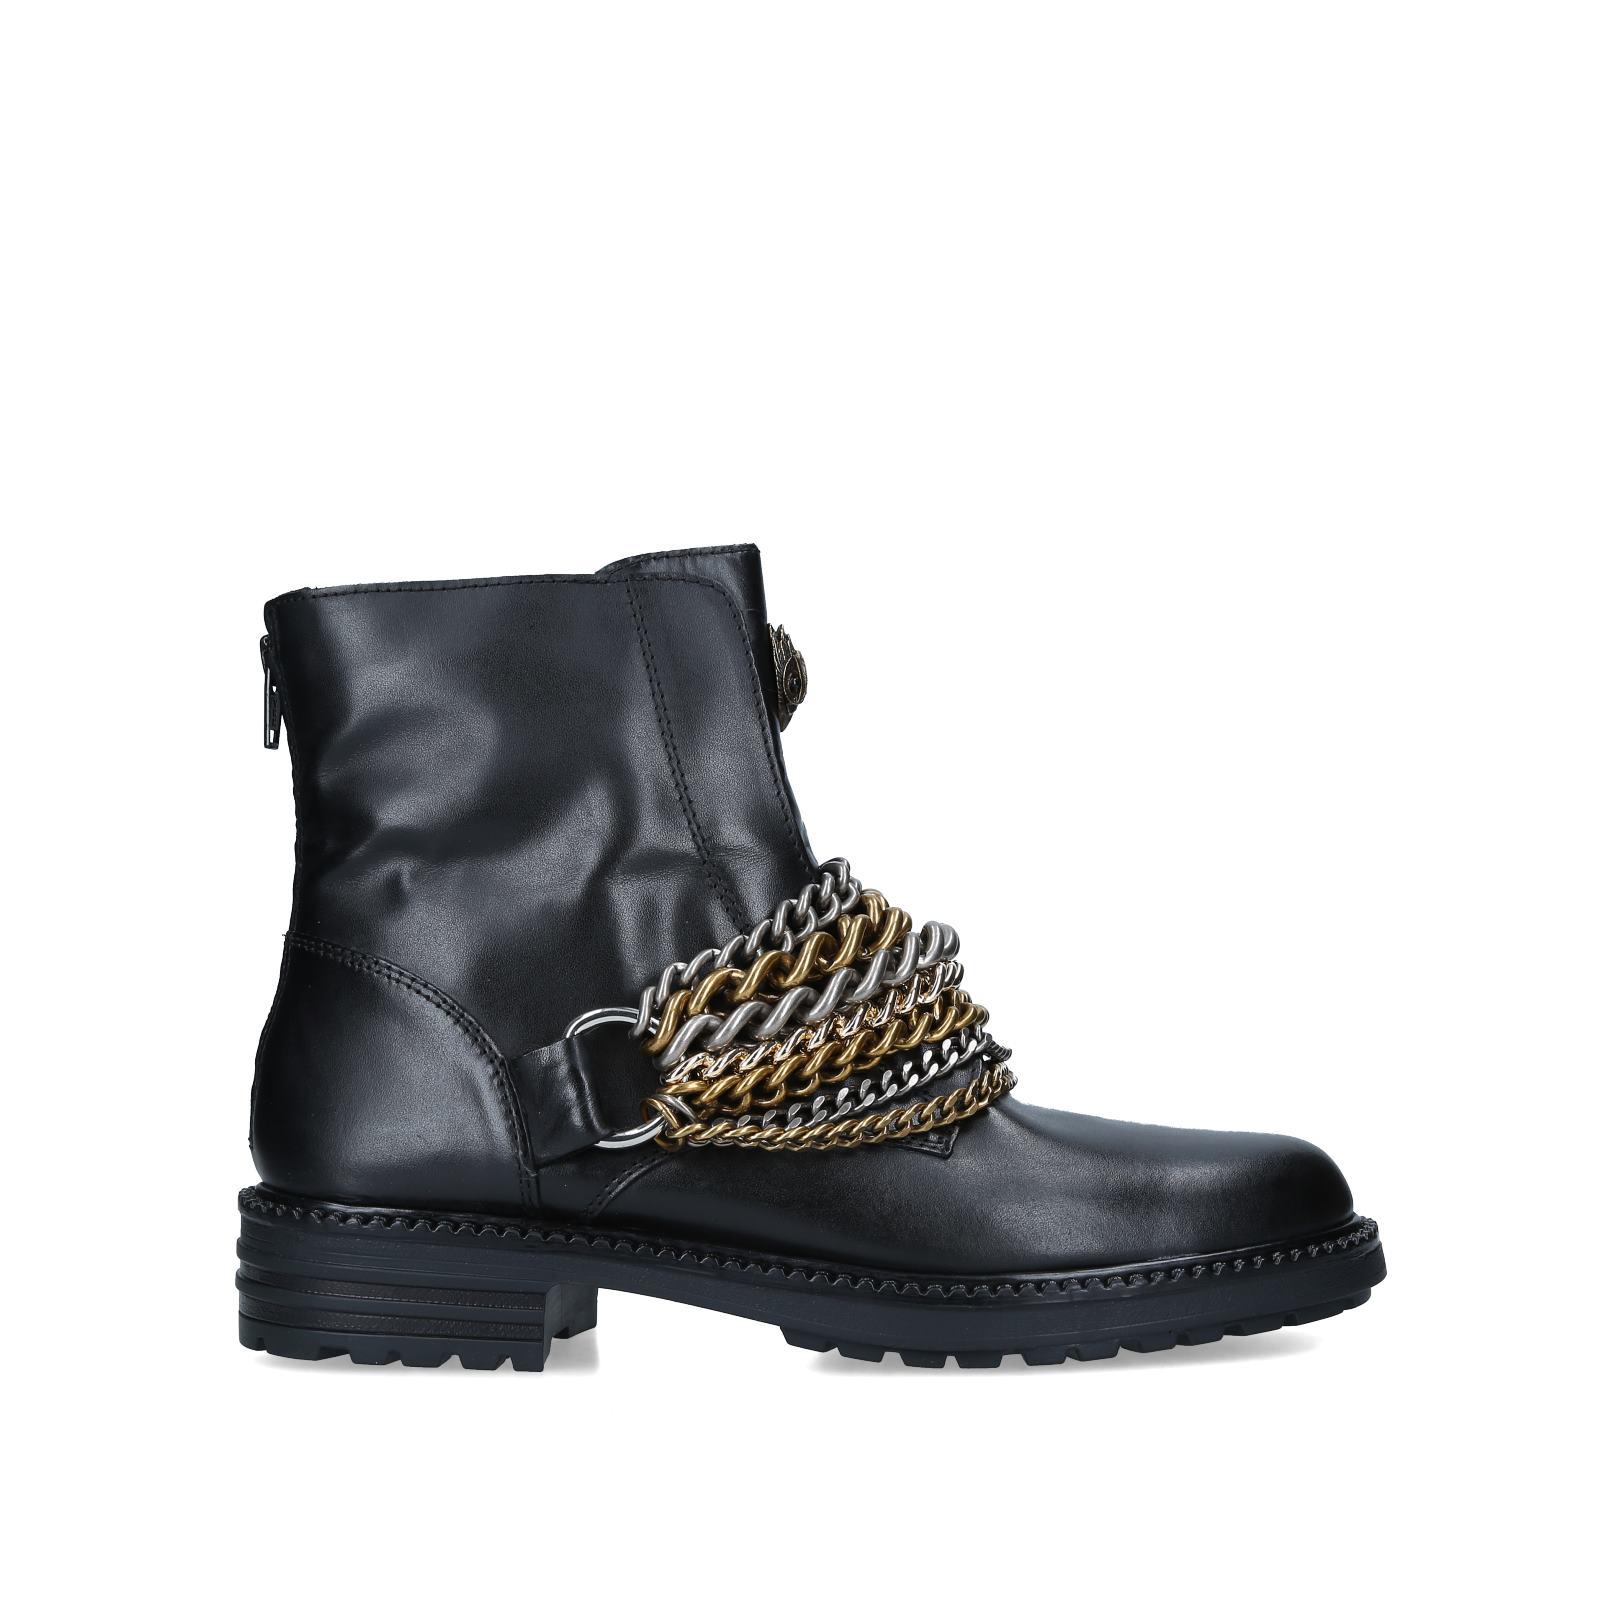 STEFAN Black Chain Detail Eagle Embellished Ankle Boot by KURT GEIGER ...